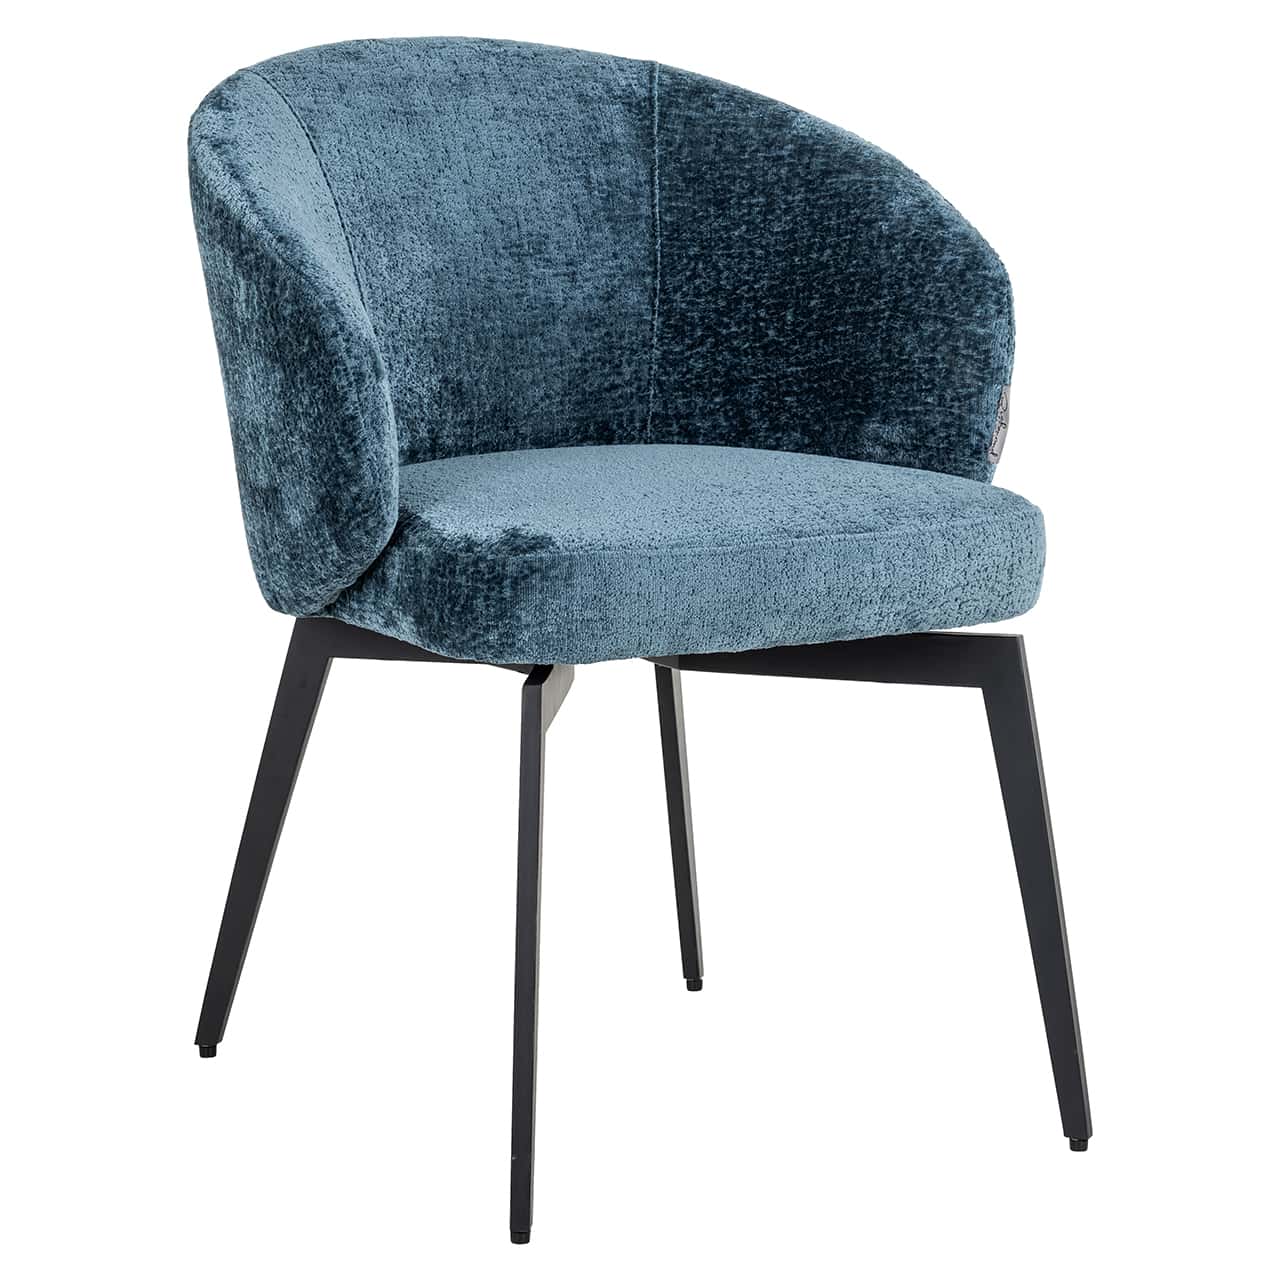 Chair Amphara blue chenille fire retardant